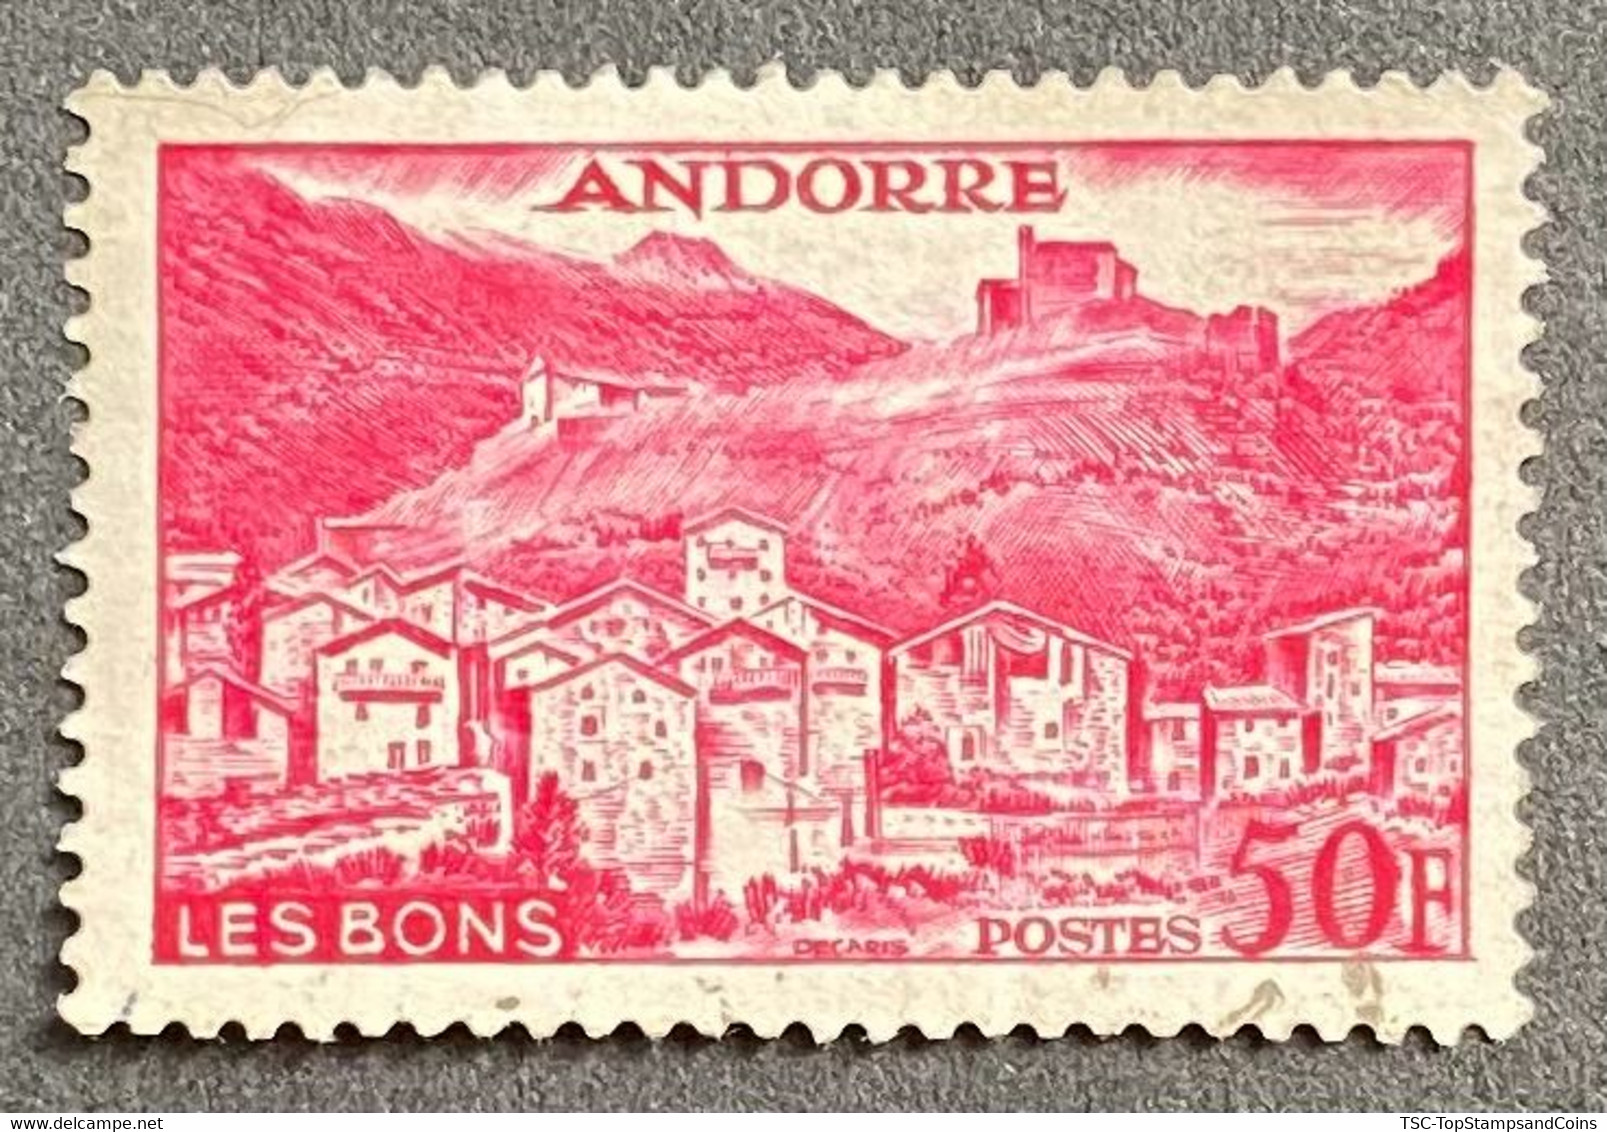 ADFR0152U - Paysages De La Principauté - 50 F Used Stamp - French Andorra - 1955 - Usados